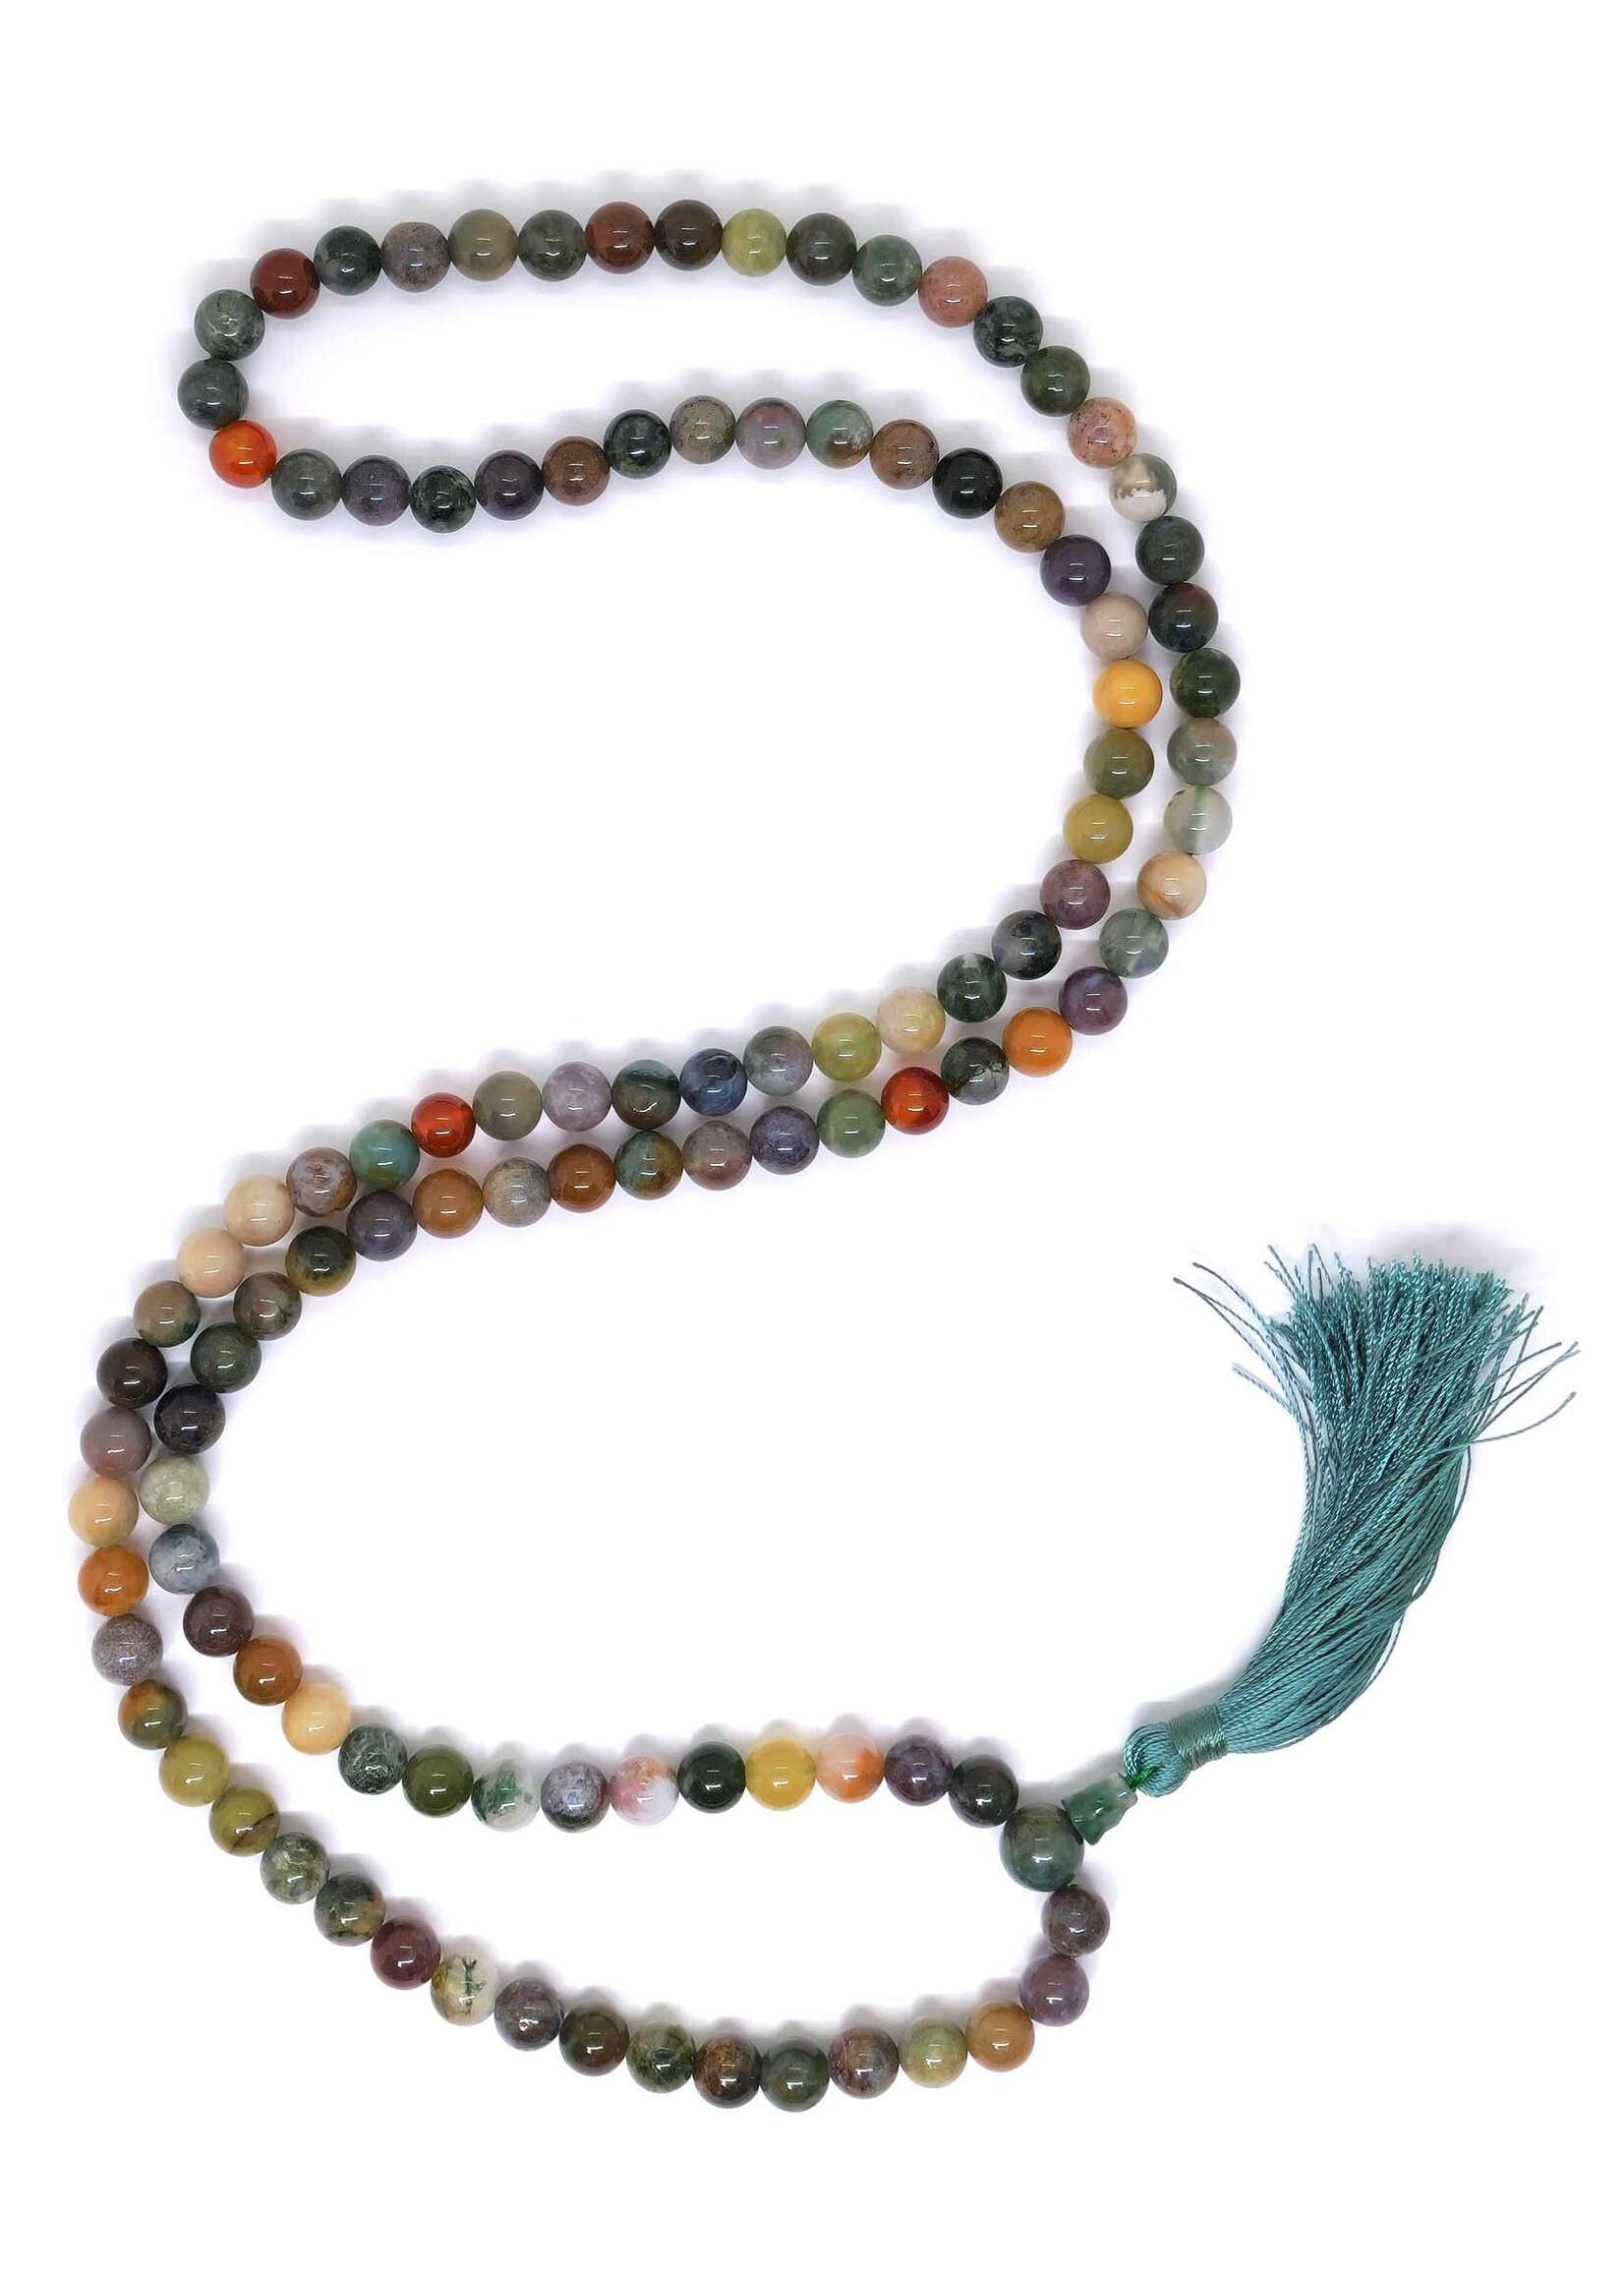 Tibetan Prayer Beads Japa Mala Mixed Agate Stones, with Tassel